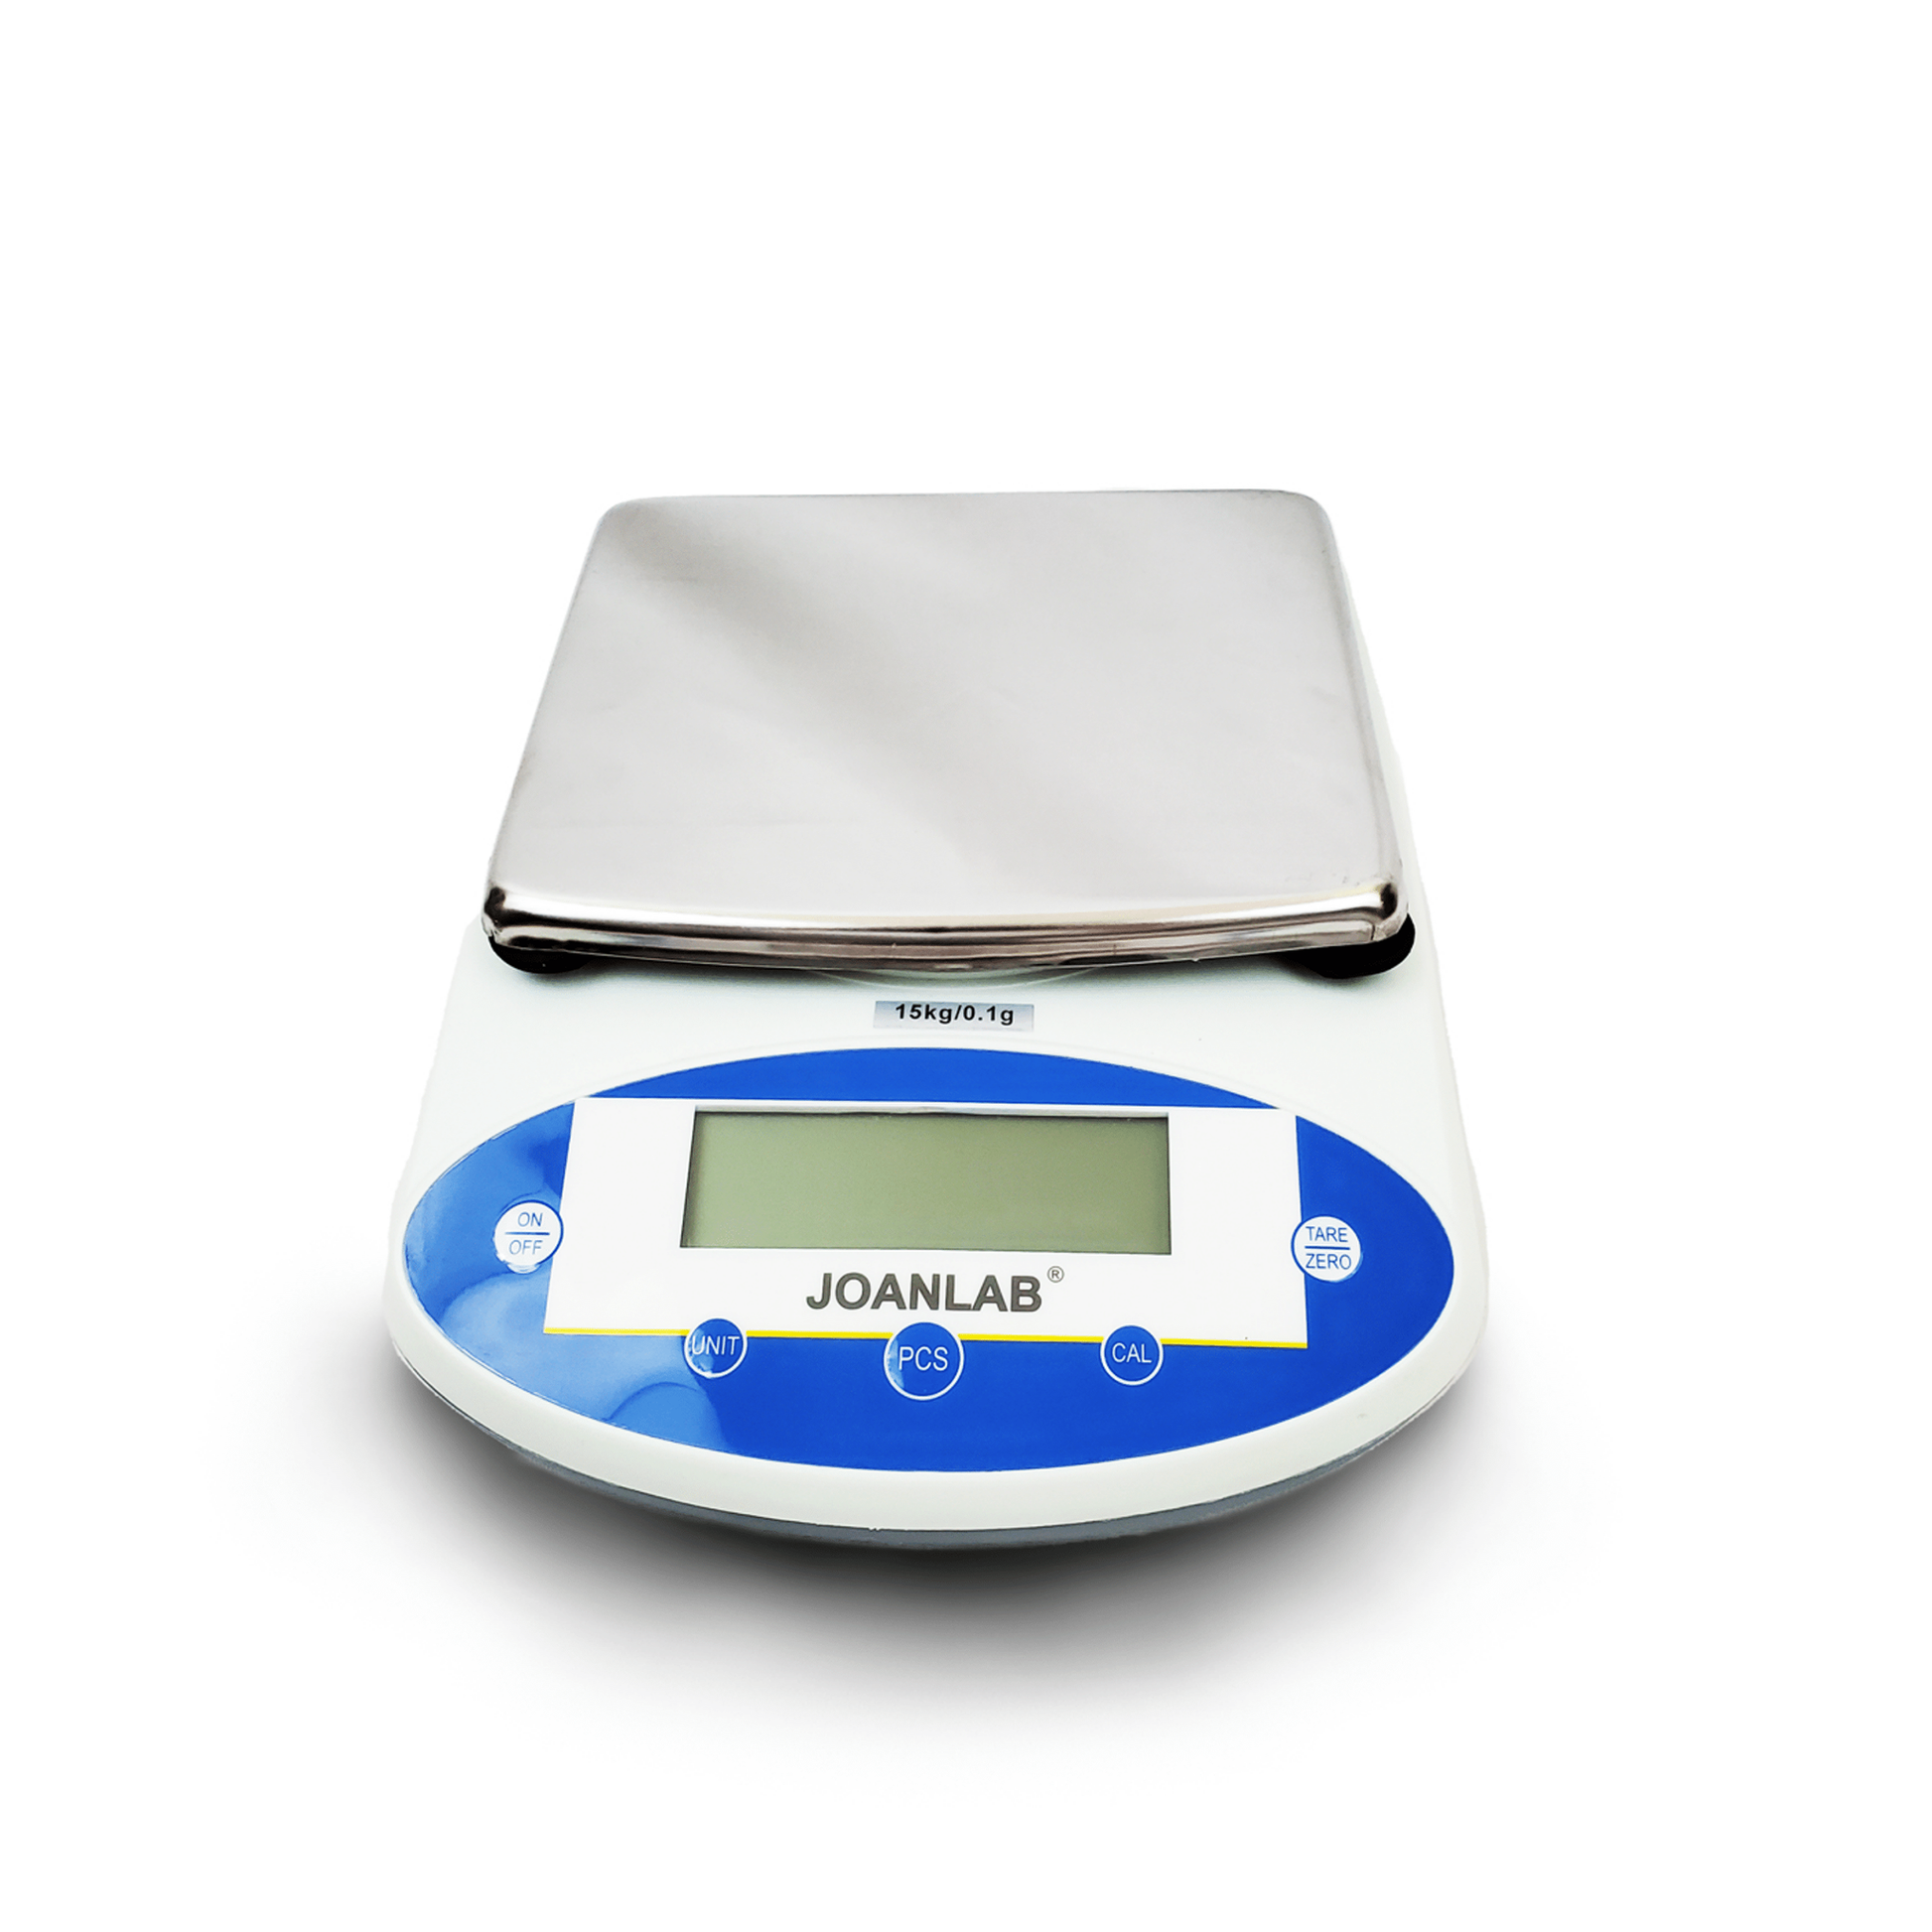 Joanlab Digital Precision Balance Scale, 15kg Capacity and 0.1g Accuracy